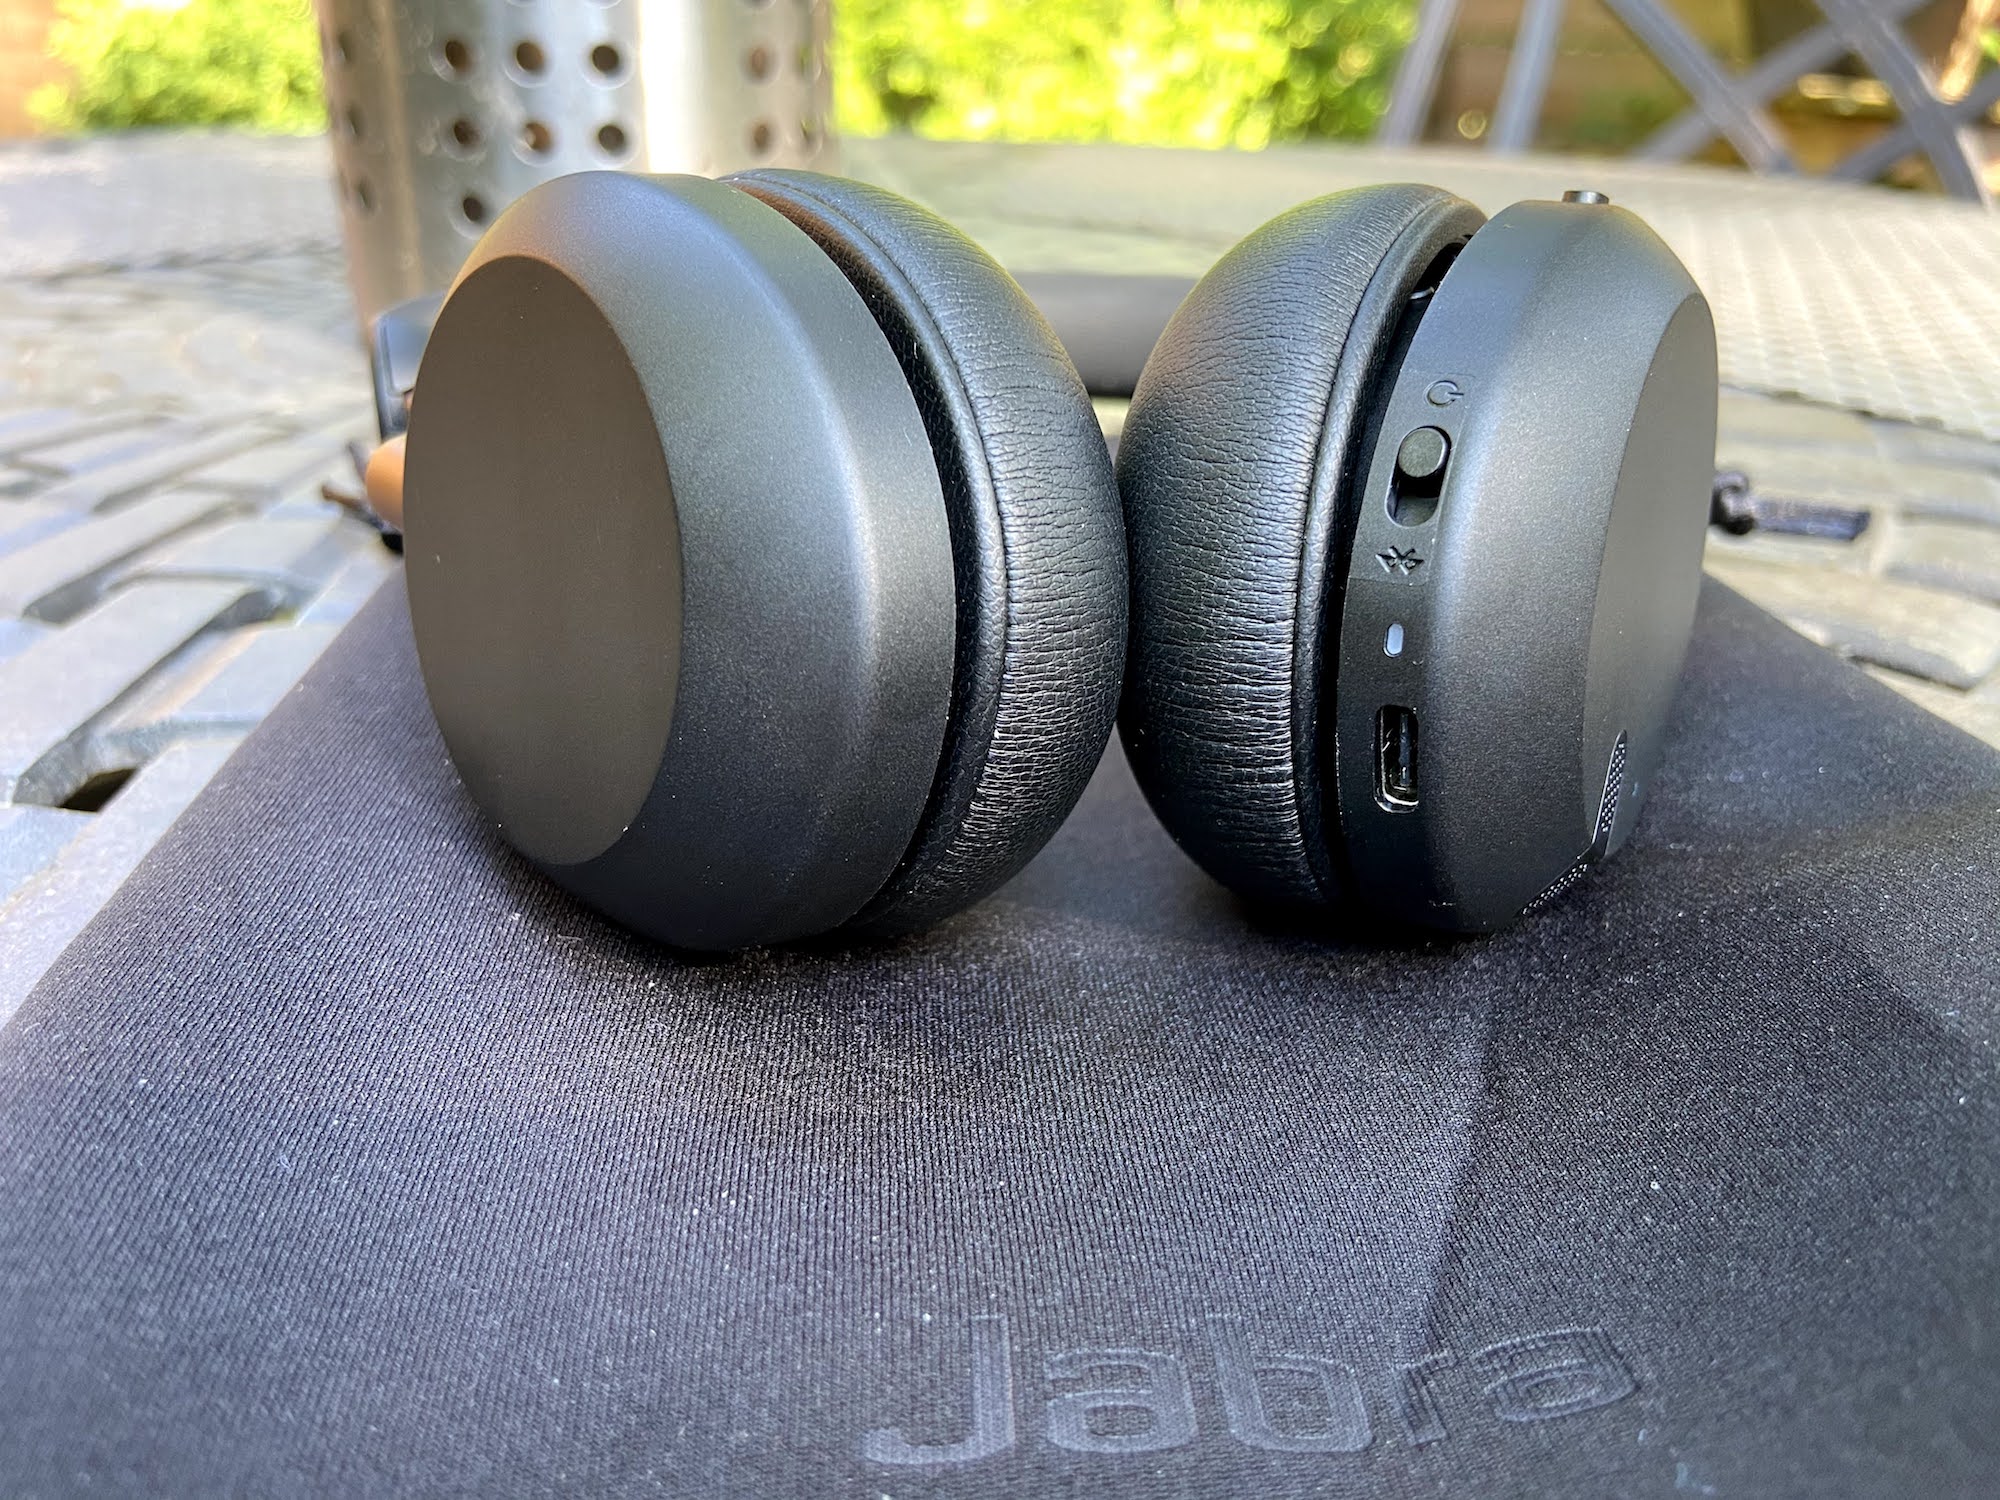 Jabra Elite 45h review: Take these headphones anywhere - SoundGuys